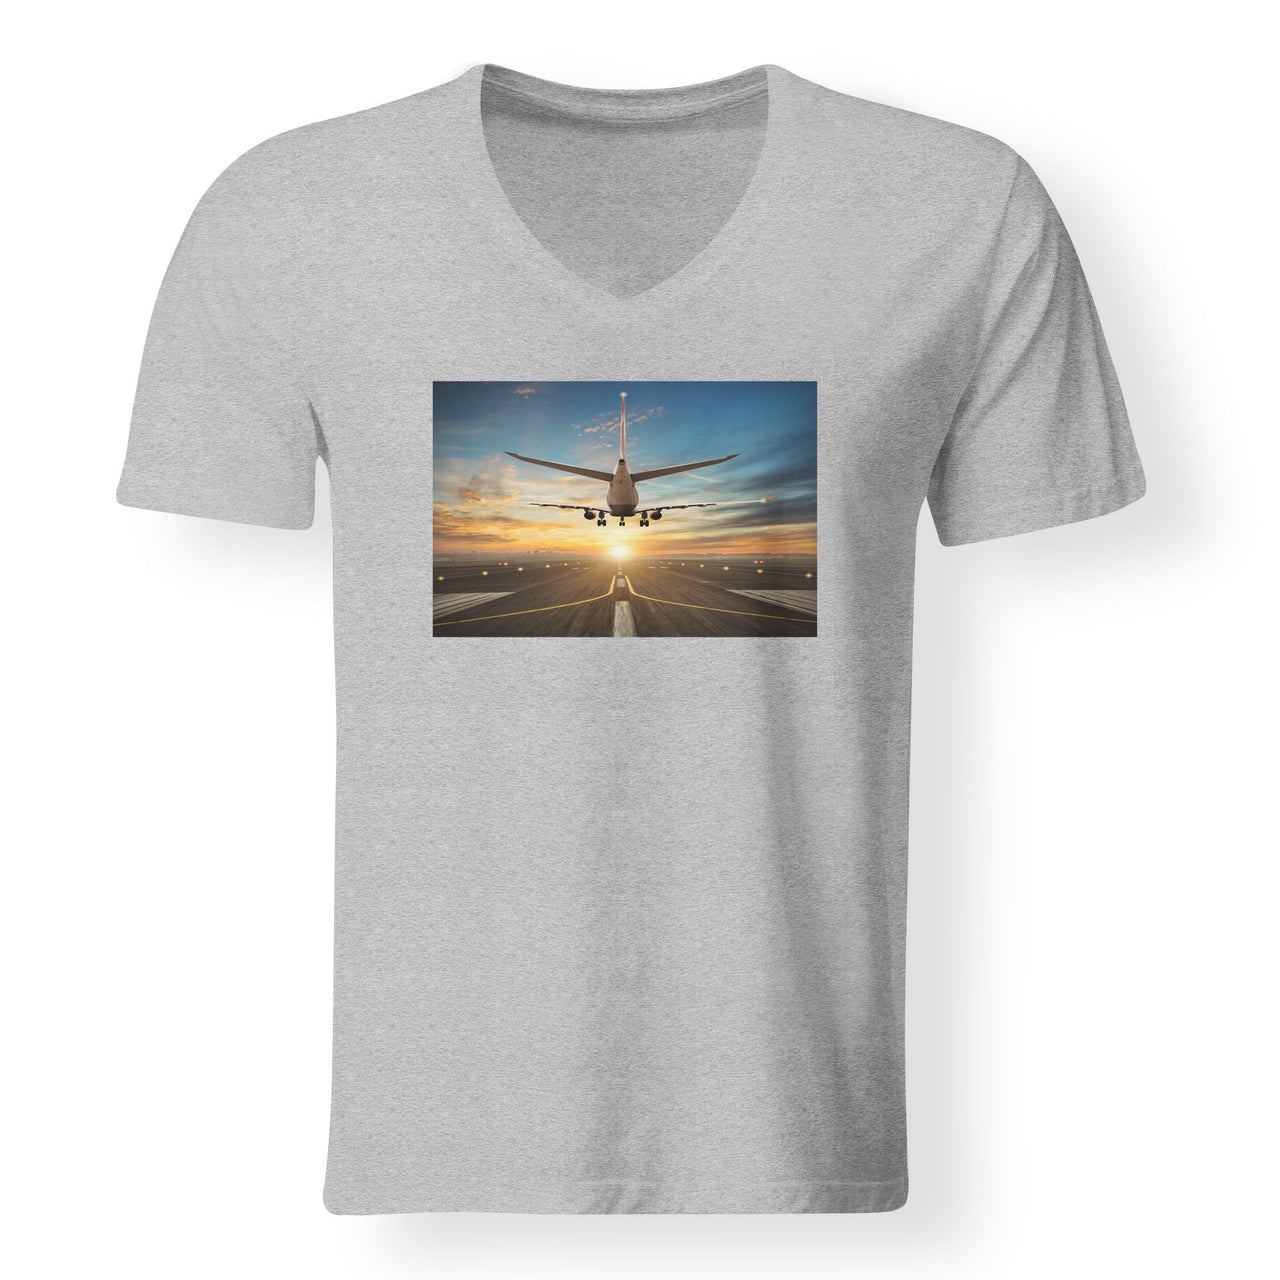 Airplane over Runway Towards the Sunrise Designed V-Neck T-Shirts